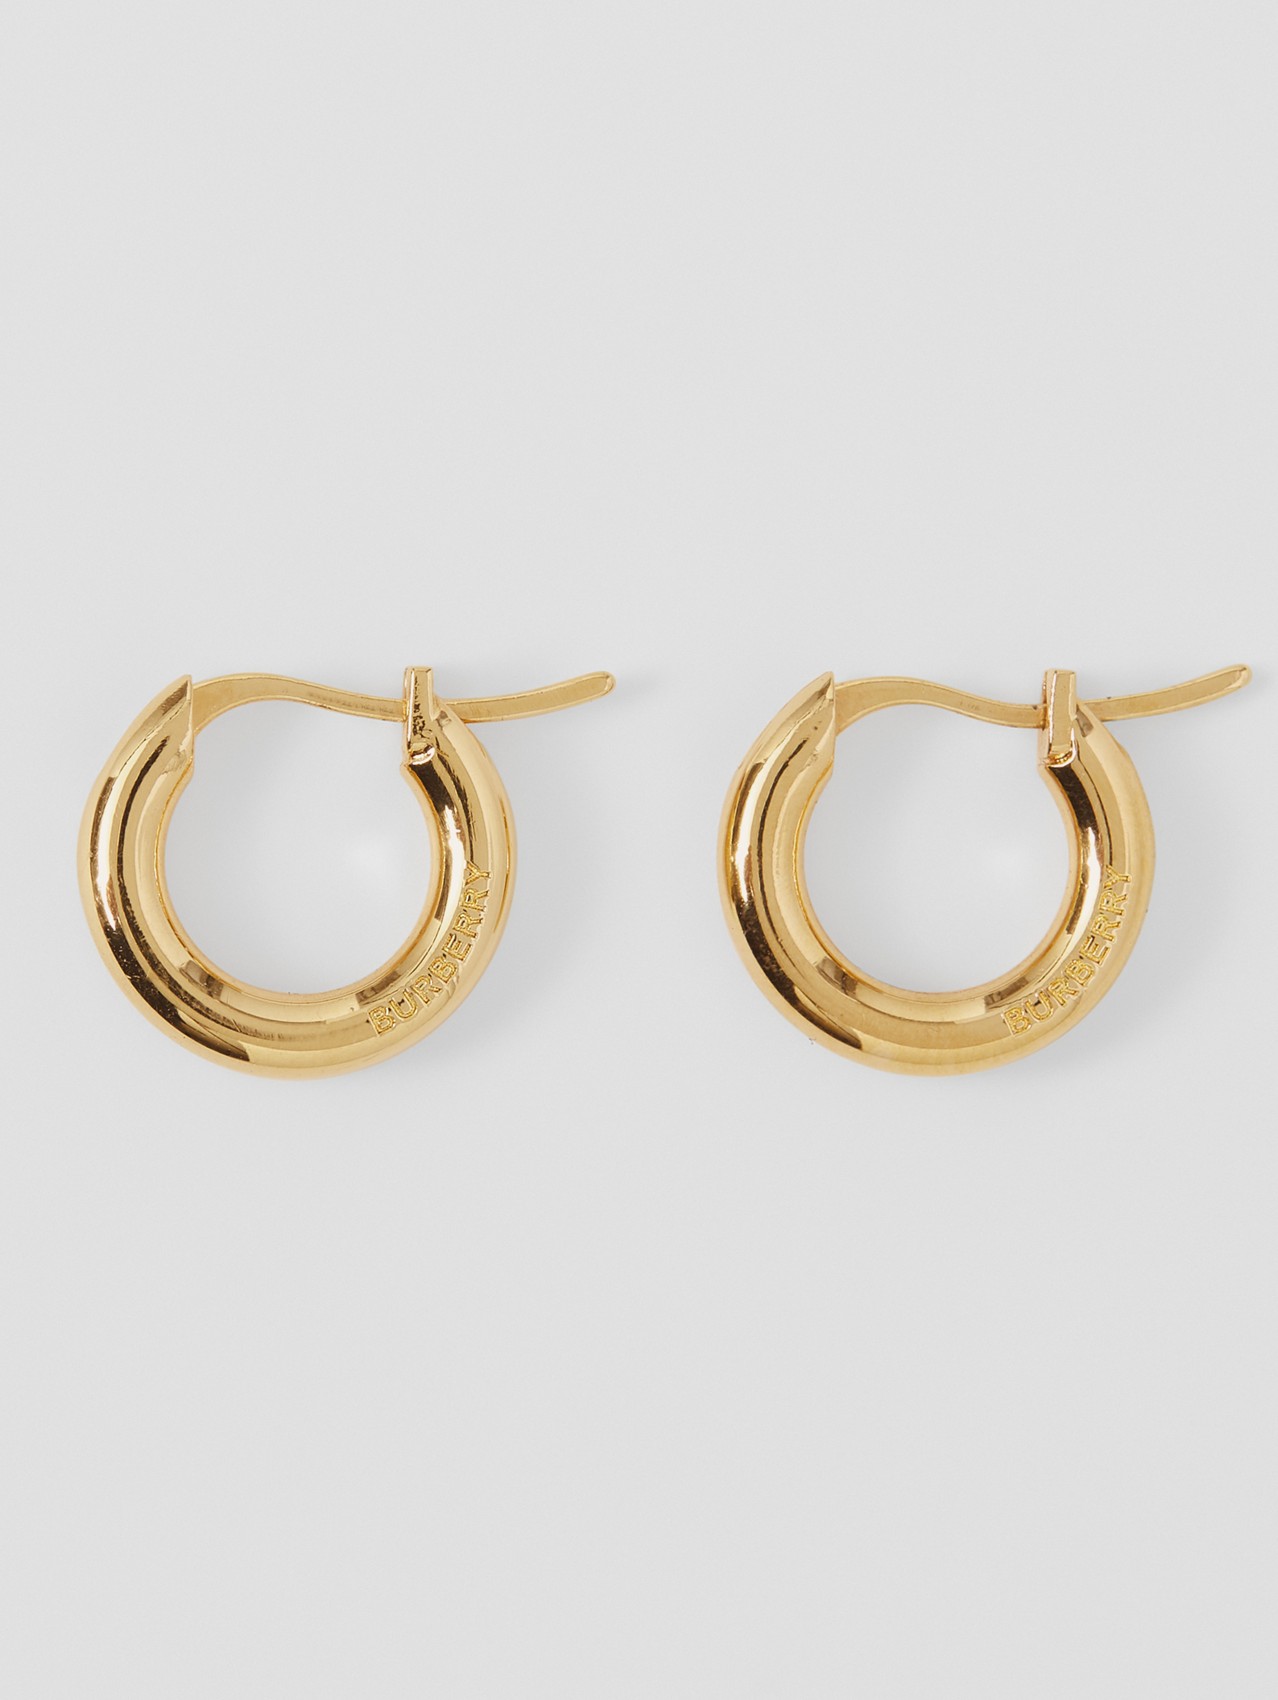 Logo Detail Gold-Plated Hoop Earrings in Light